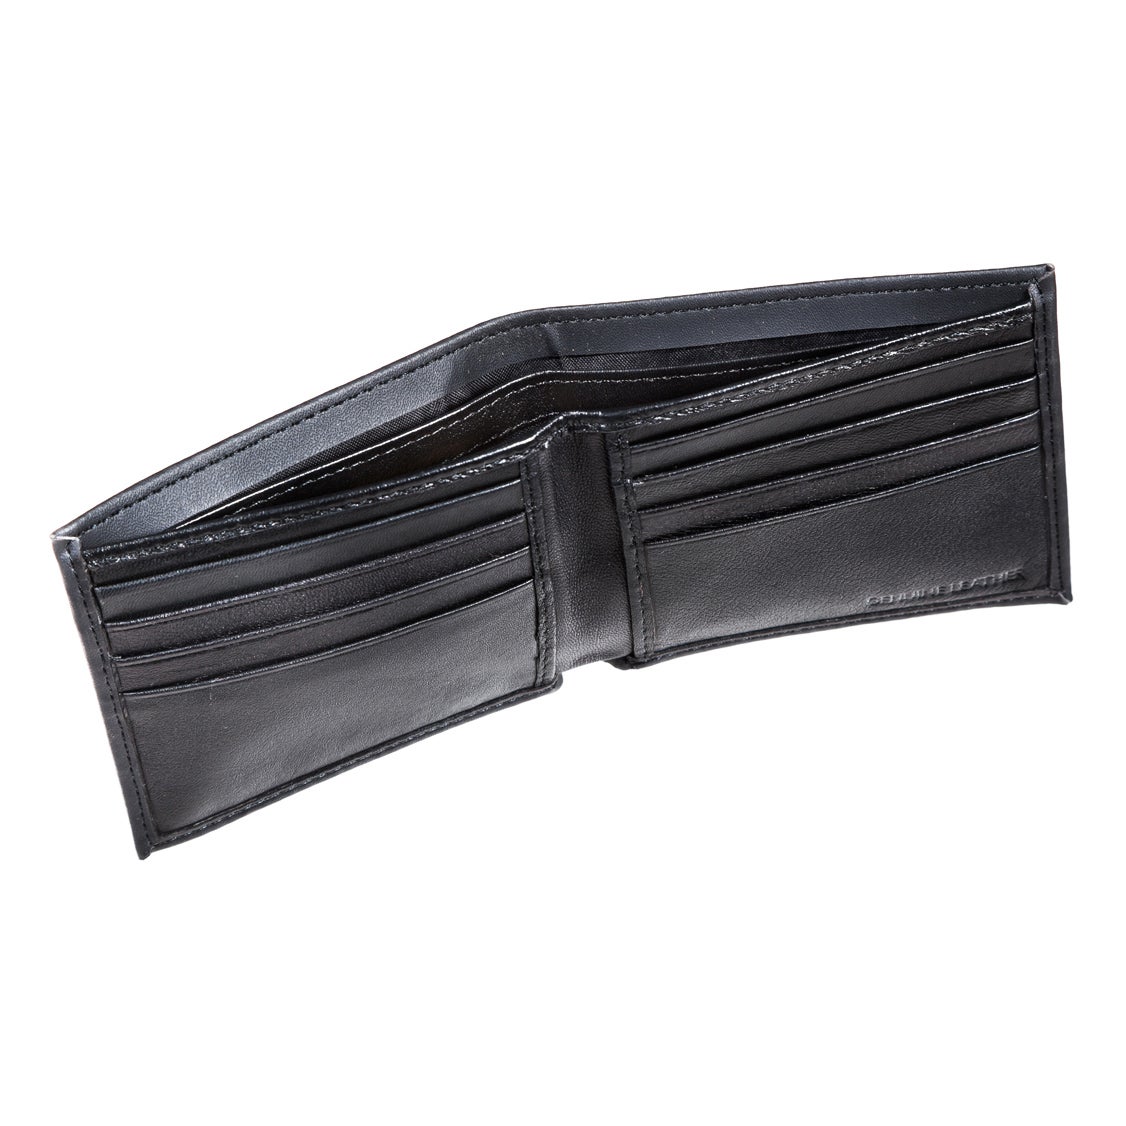 Cleveland Browns Bi-Fold Leather Wallet